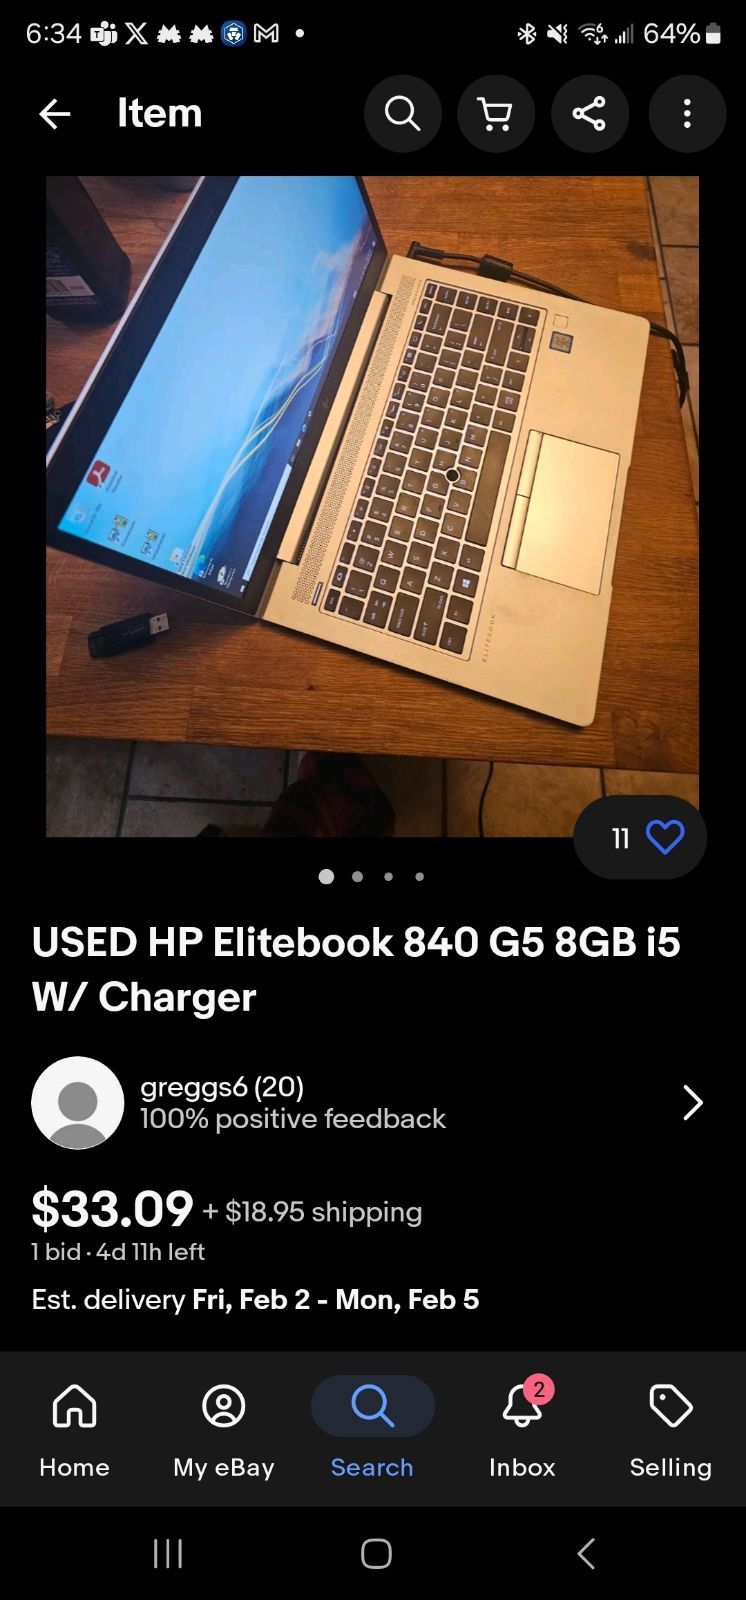 Used HP Elite Book G5 840